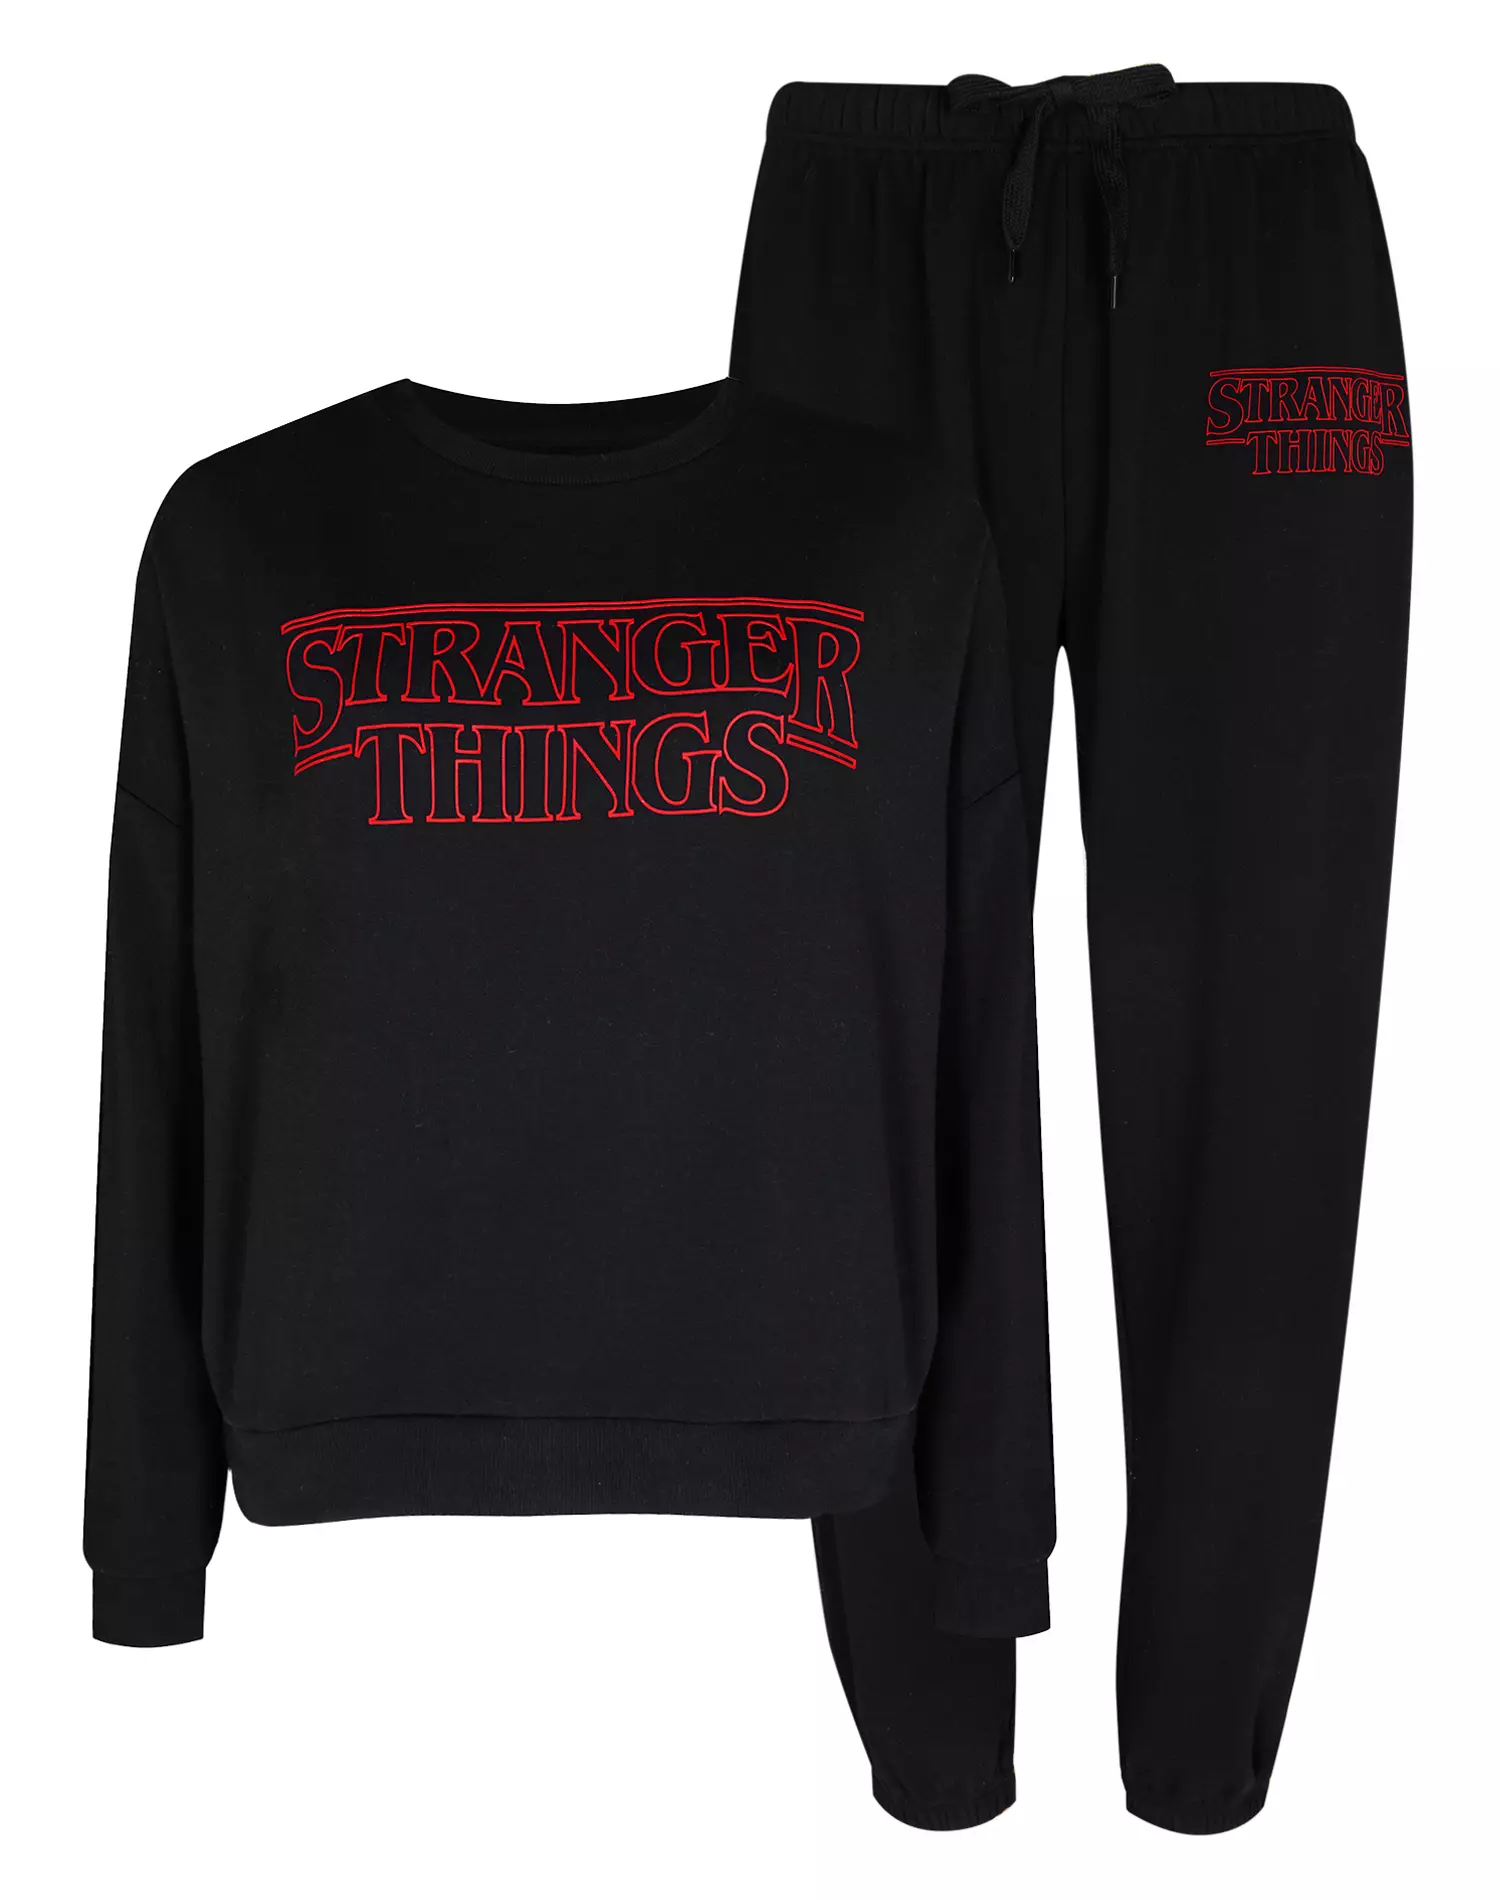 Stranger Things joggers, £10, and sweatshirts, £10 (